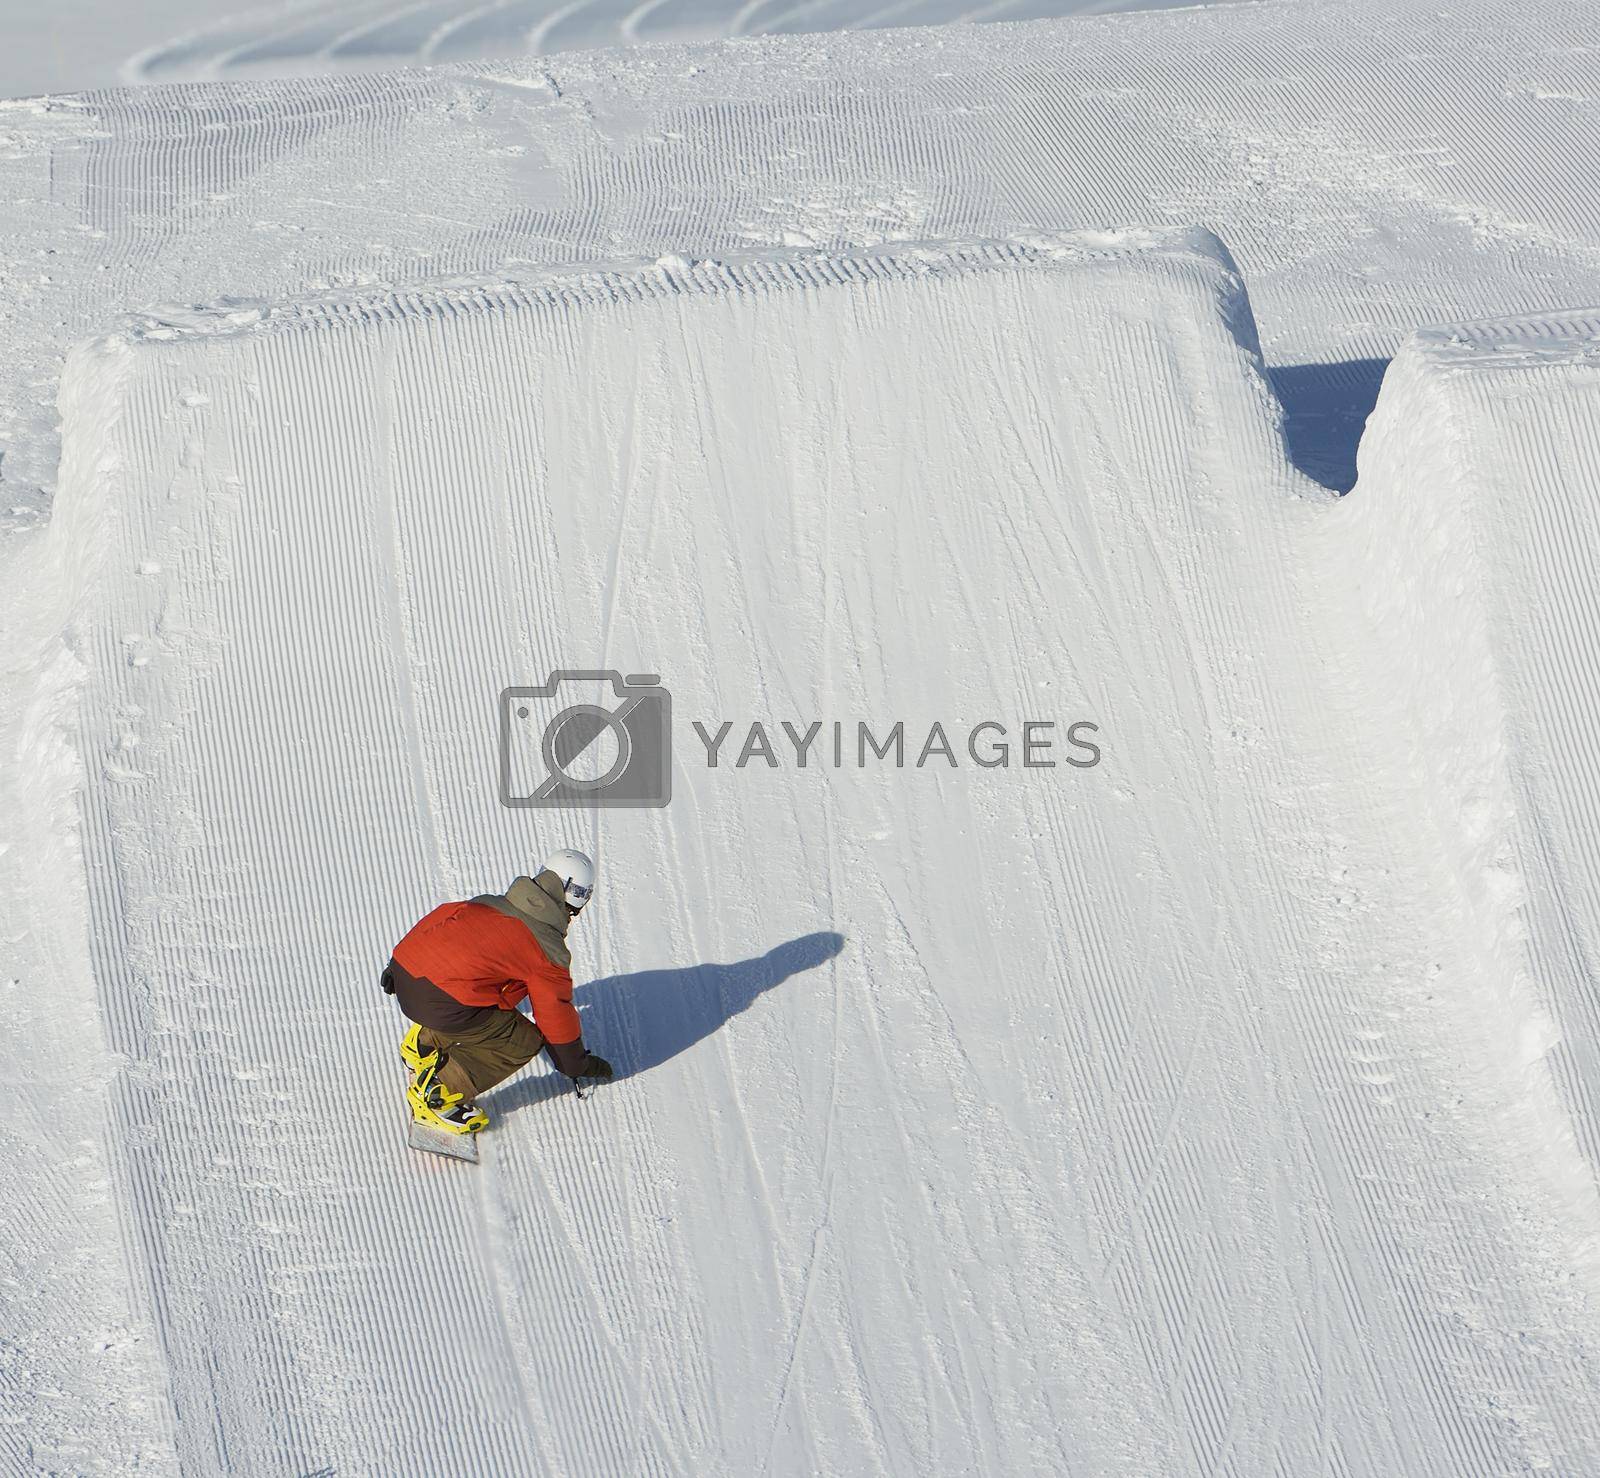 Royalty free image of skier by dotshock